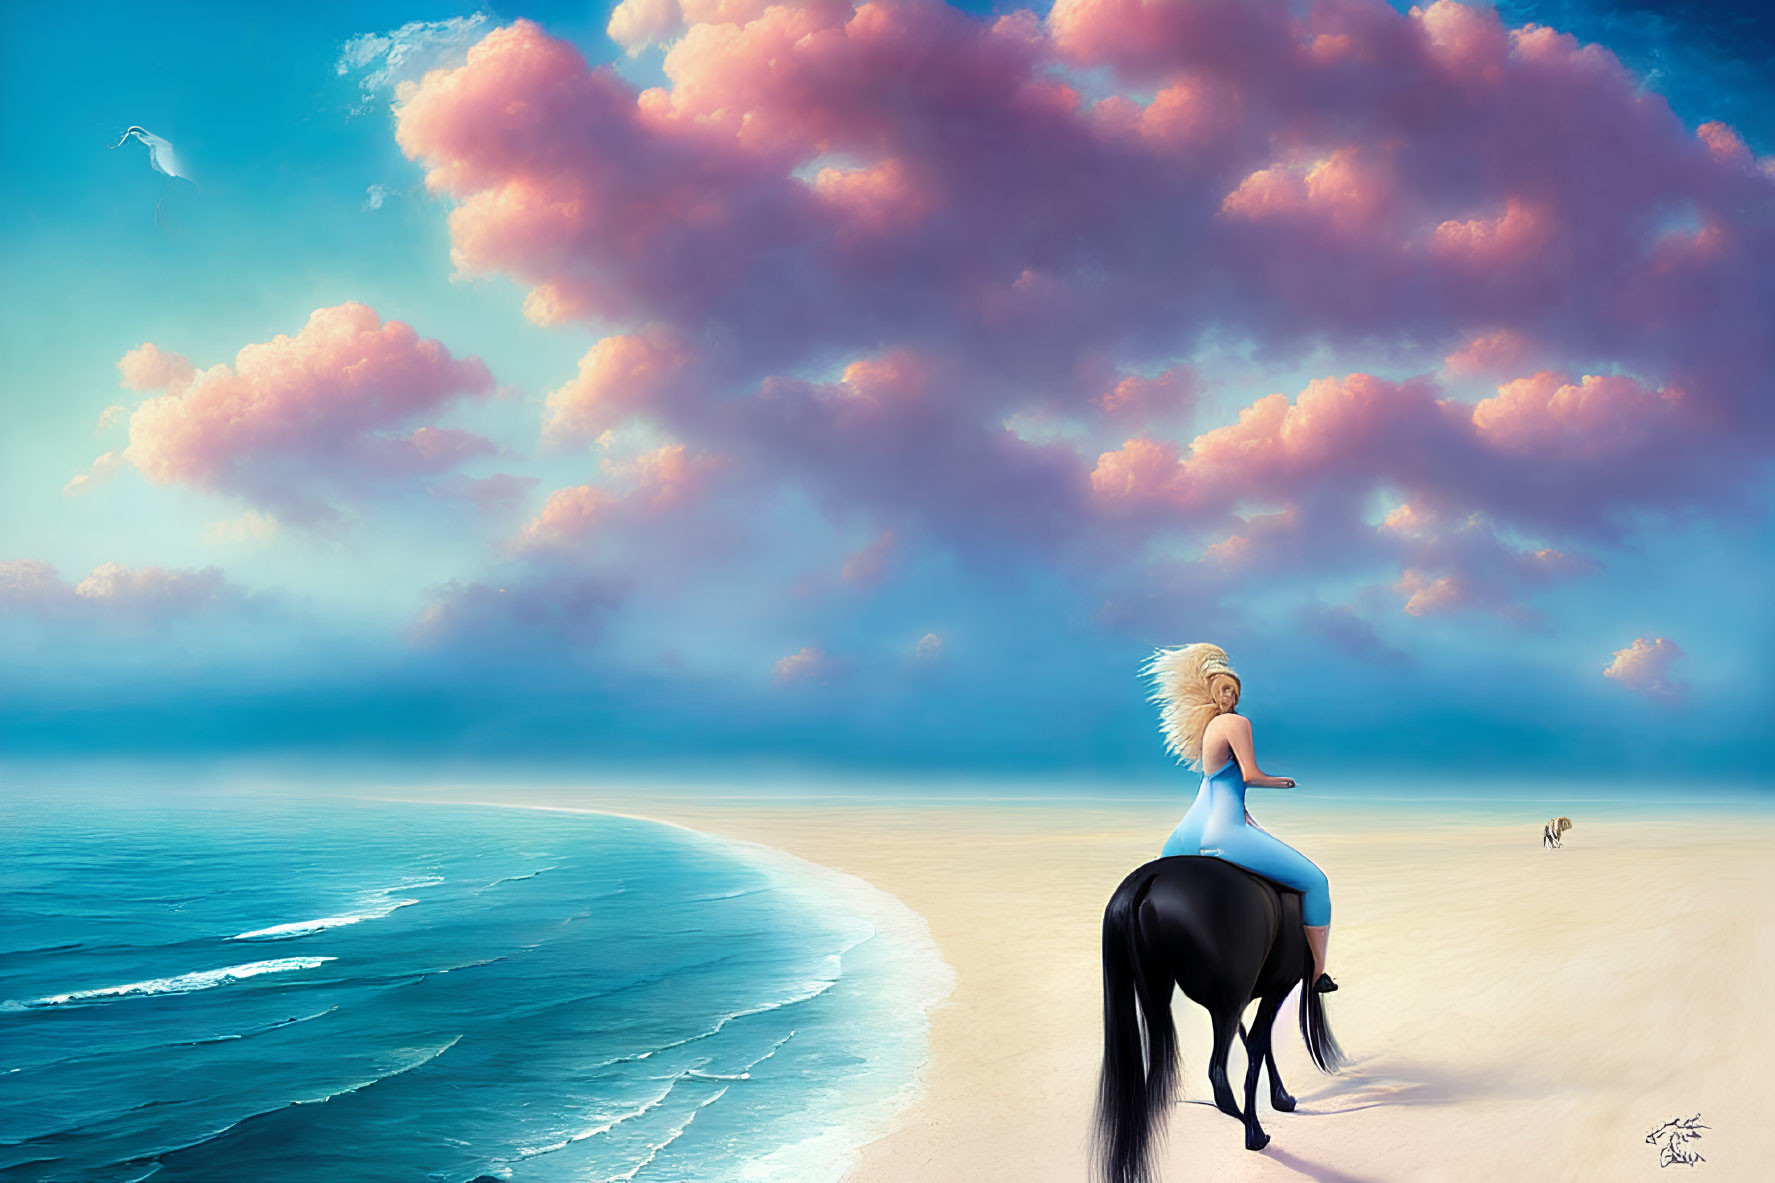 Blonde woman riding black horse on beach under pink sky